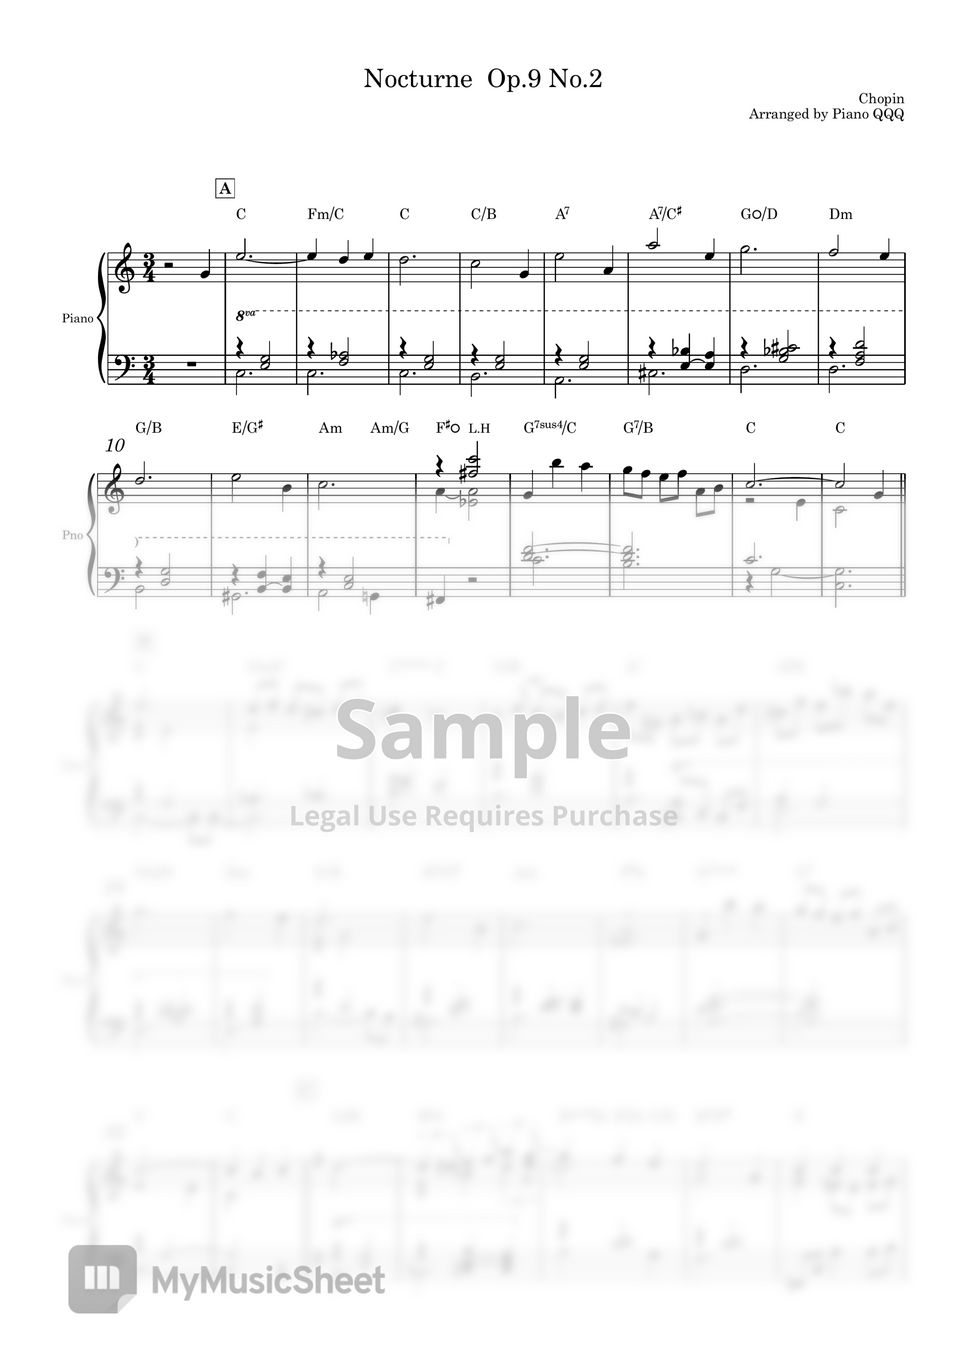 Chopin - Nocturne Op.9 No.2 (Piano Solo) Sheets by Piano QQQ